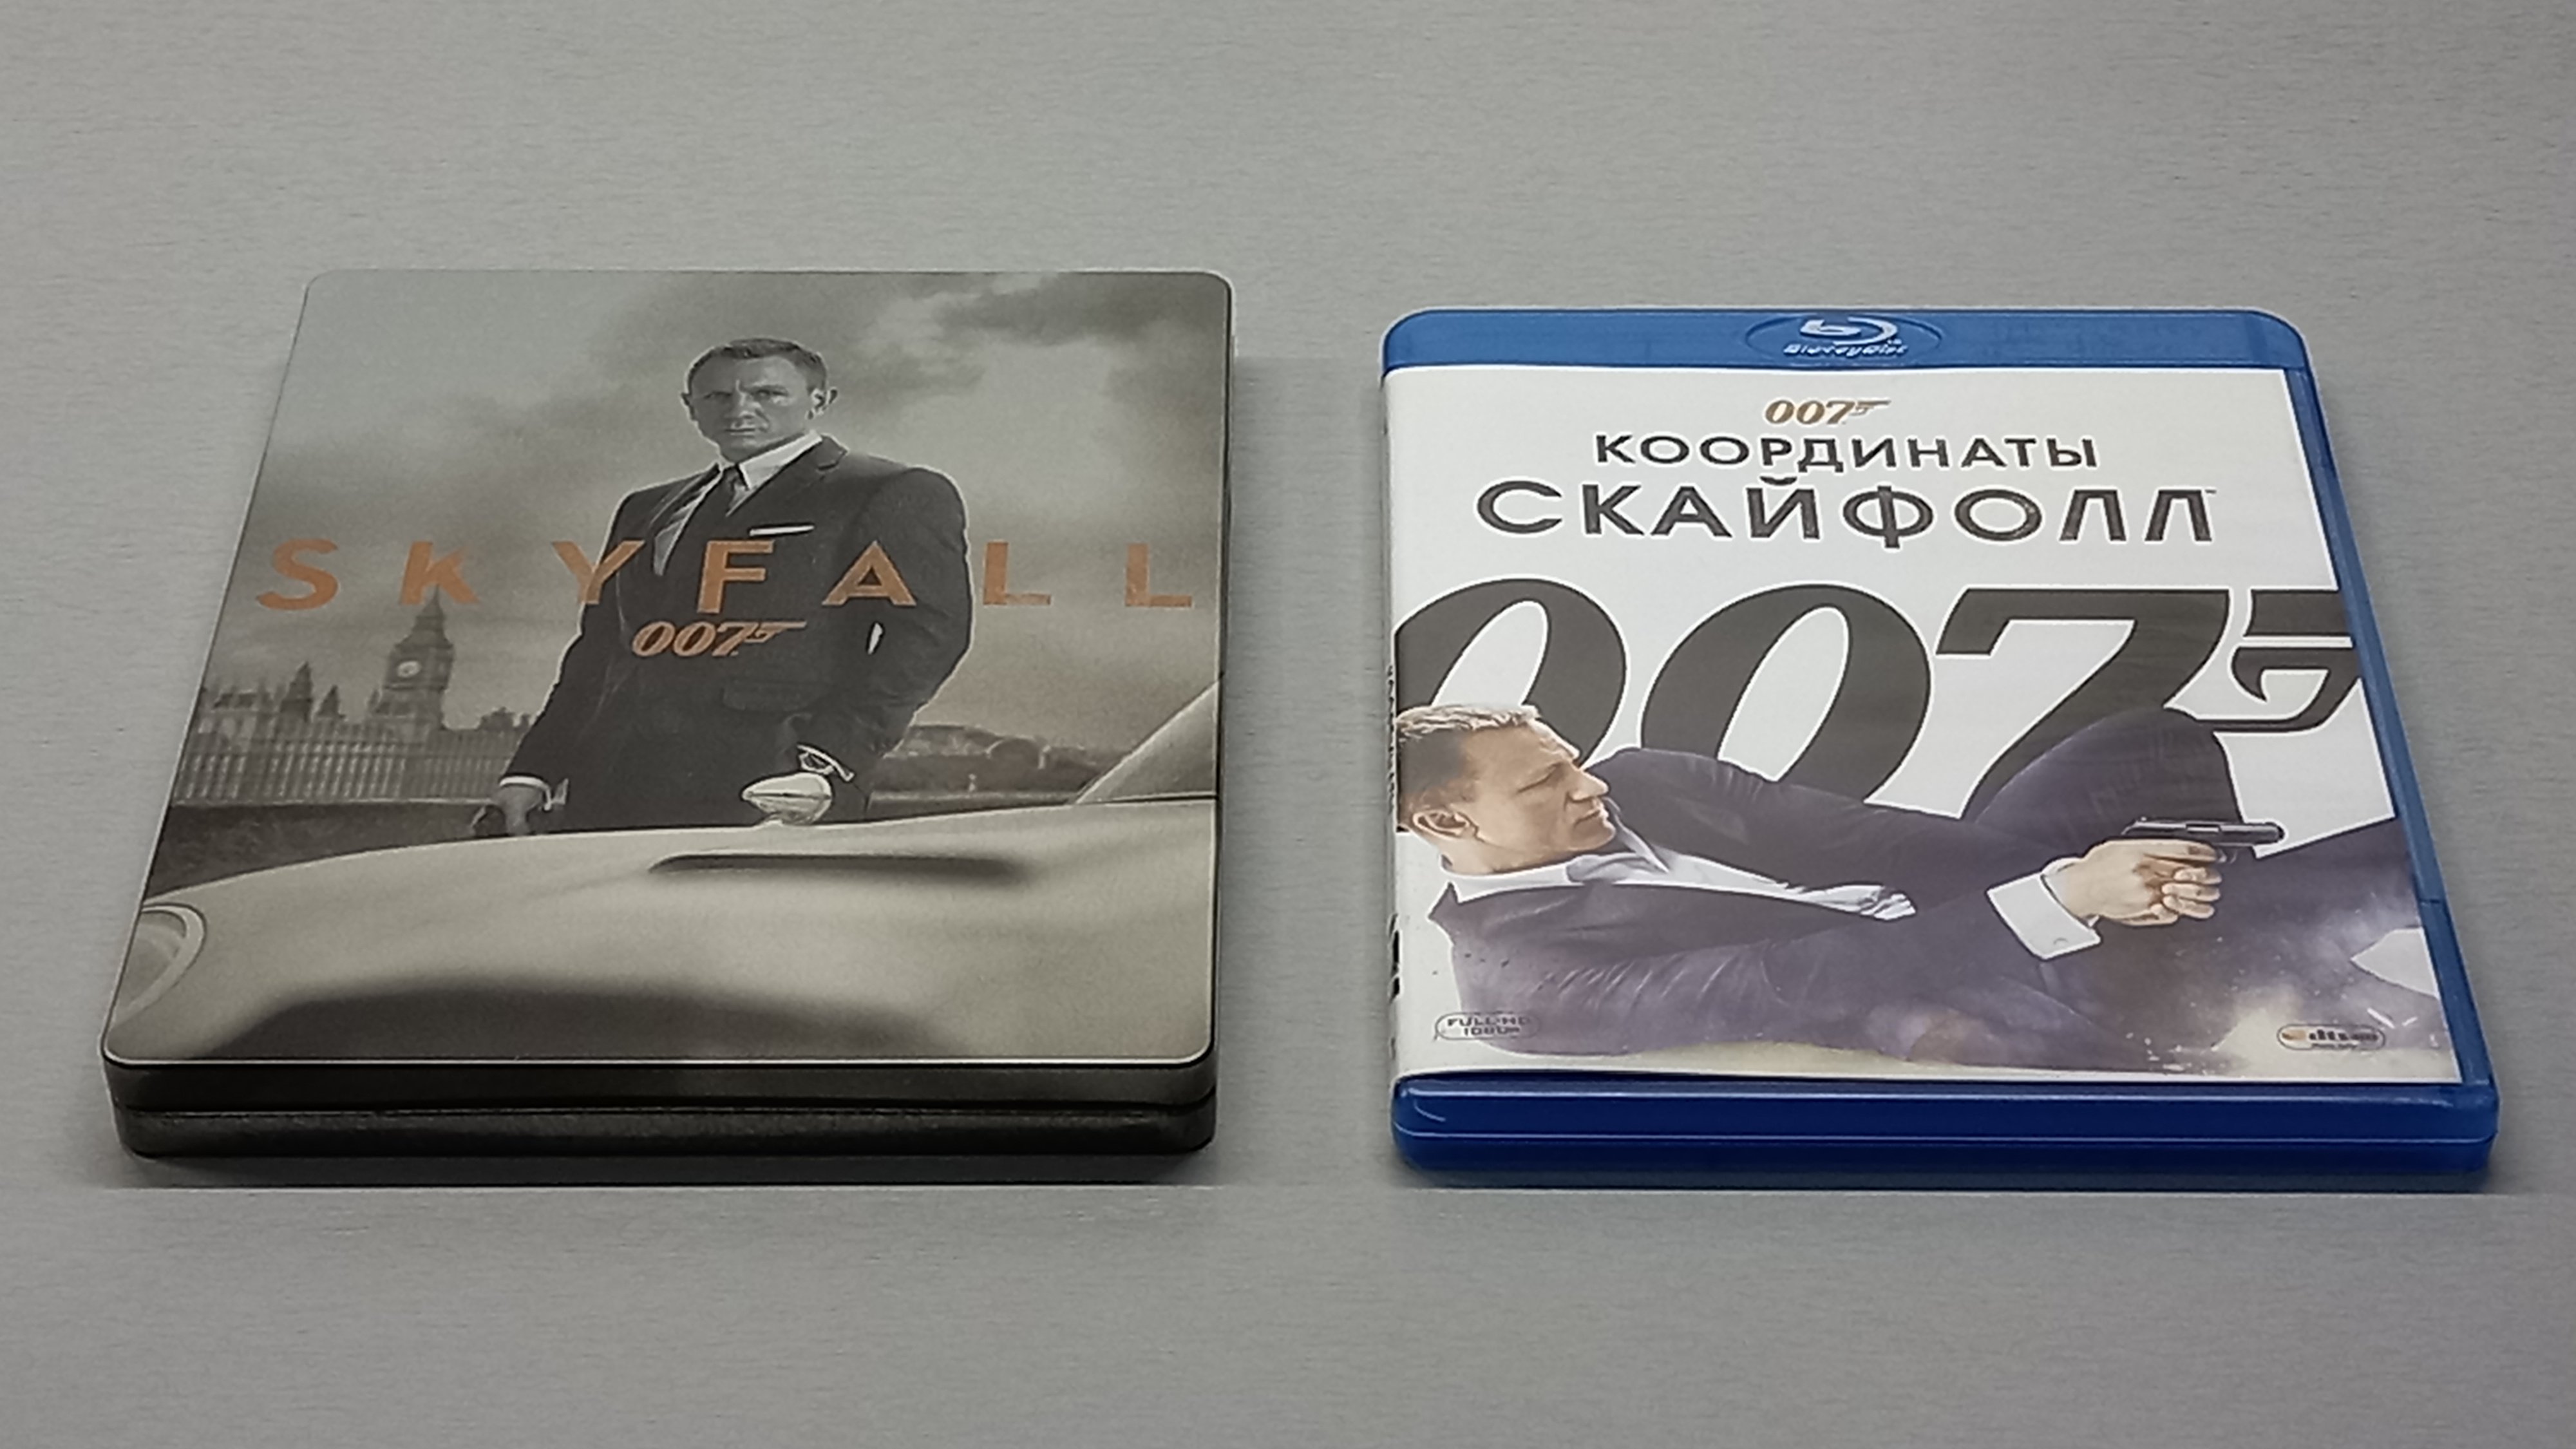 007: КООРДИНАТЫ "СКАЙФОЛЛ" - Blu-ray - SKYFALL - 2012 - Daniel Craig